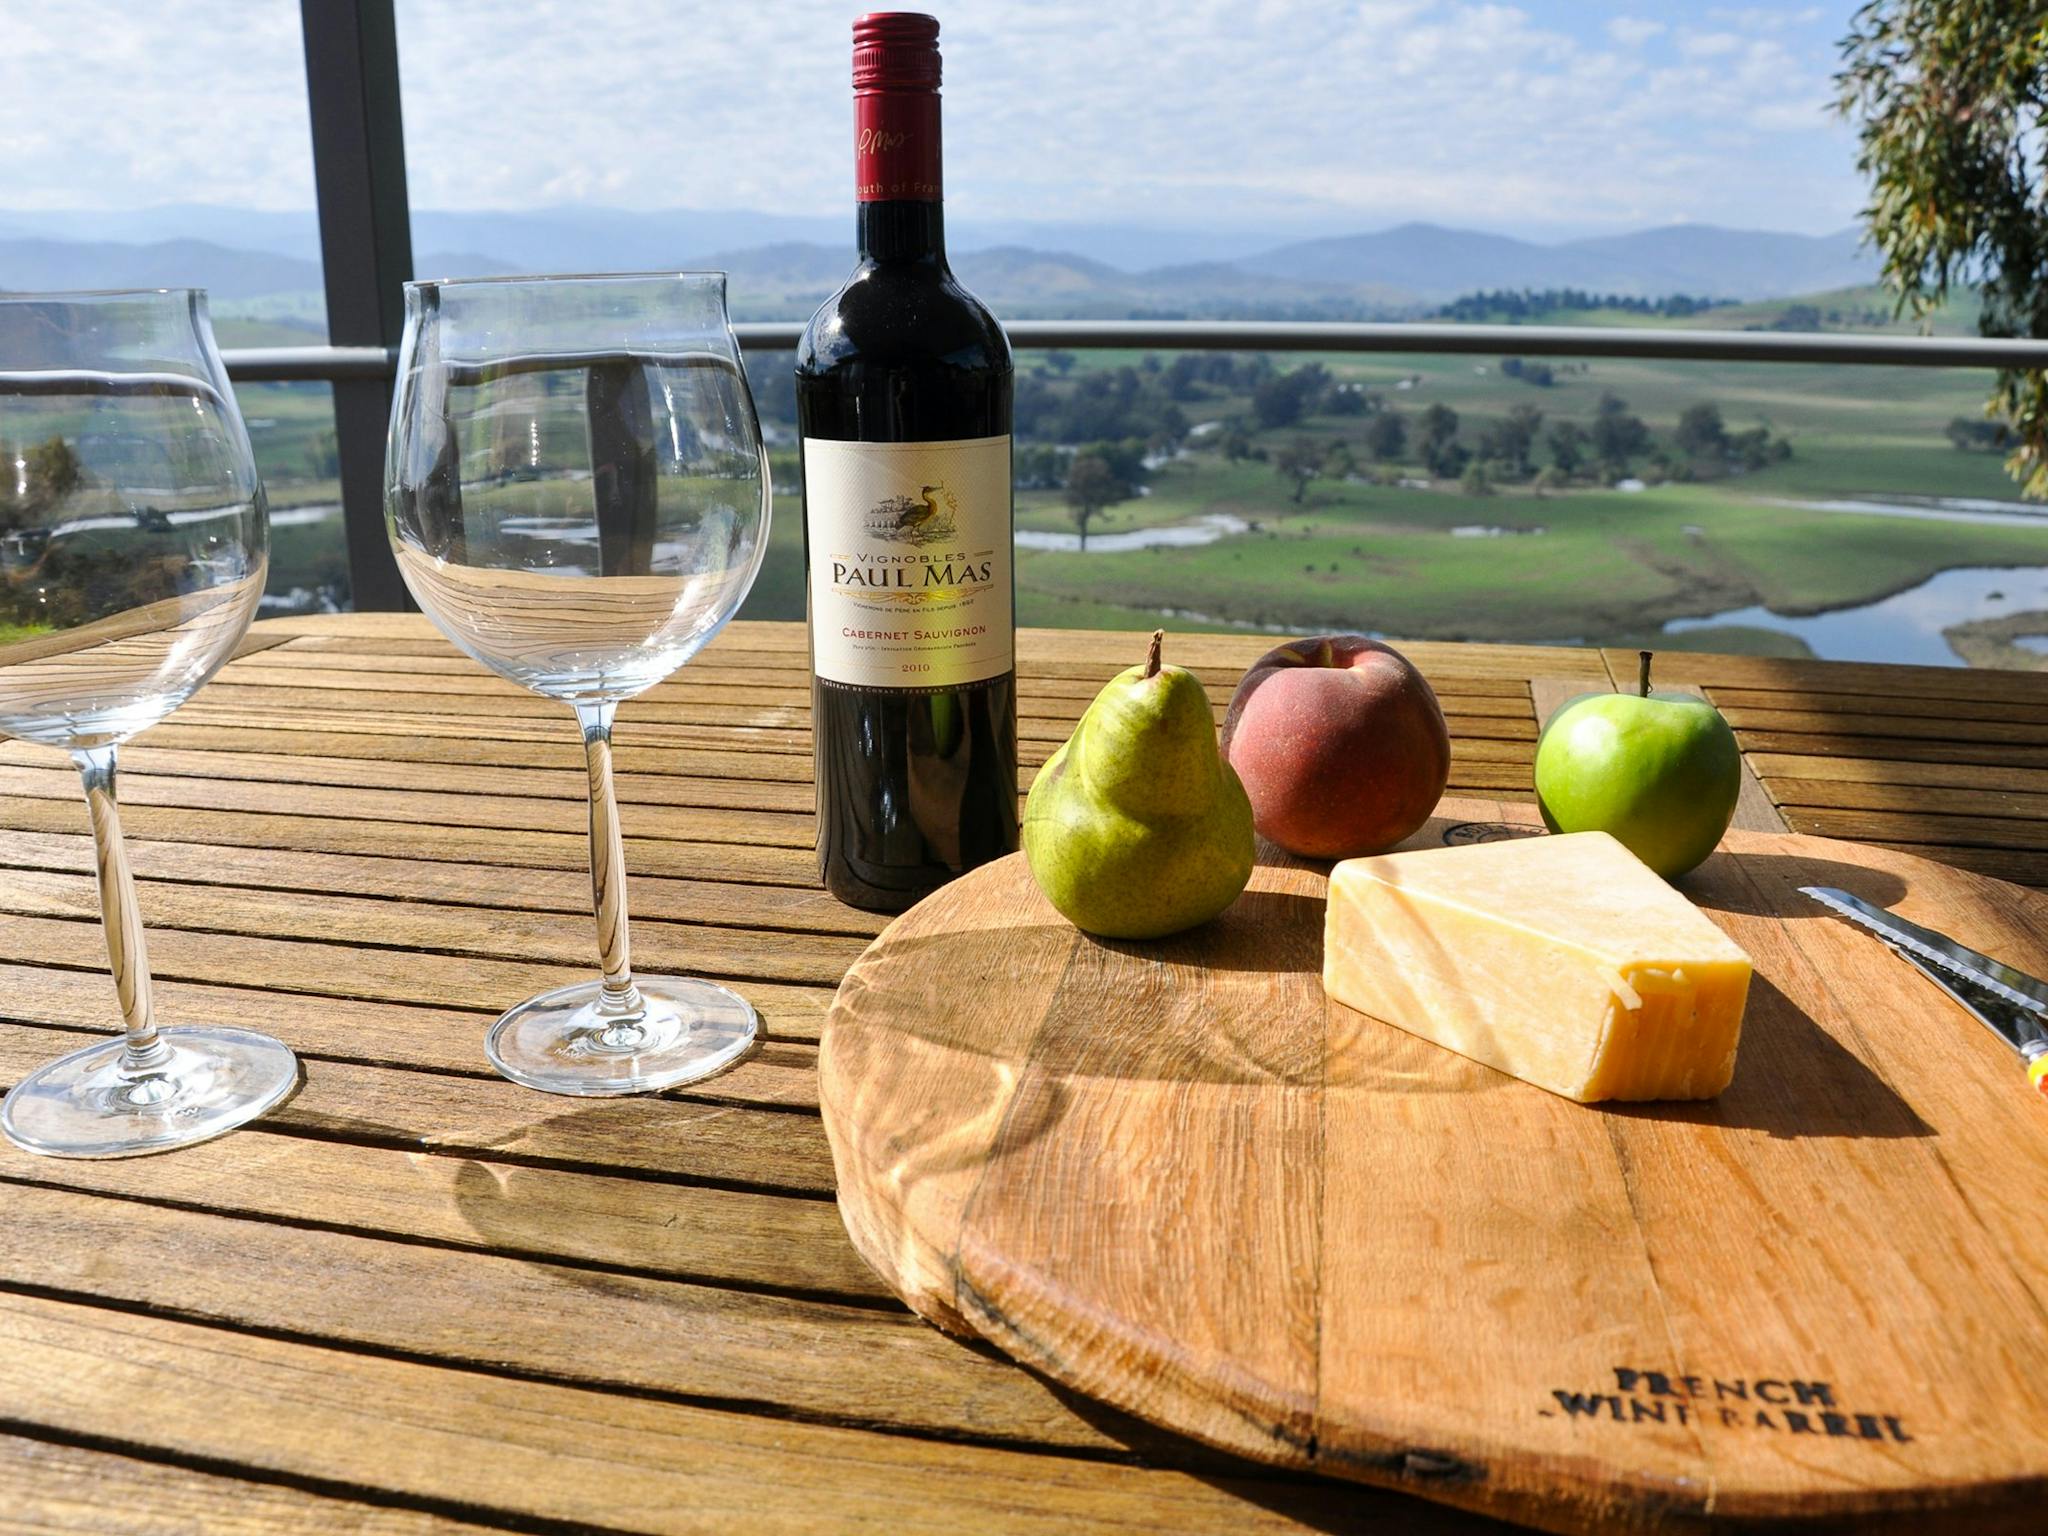 Wine, cheese and views